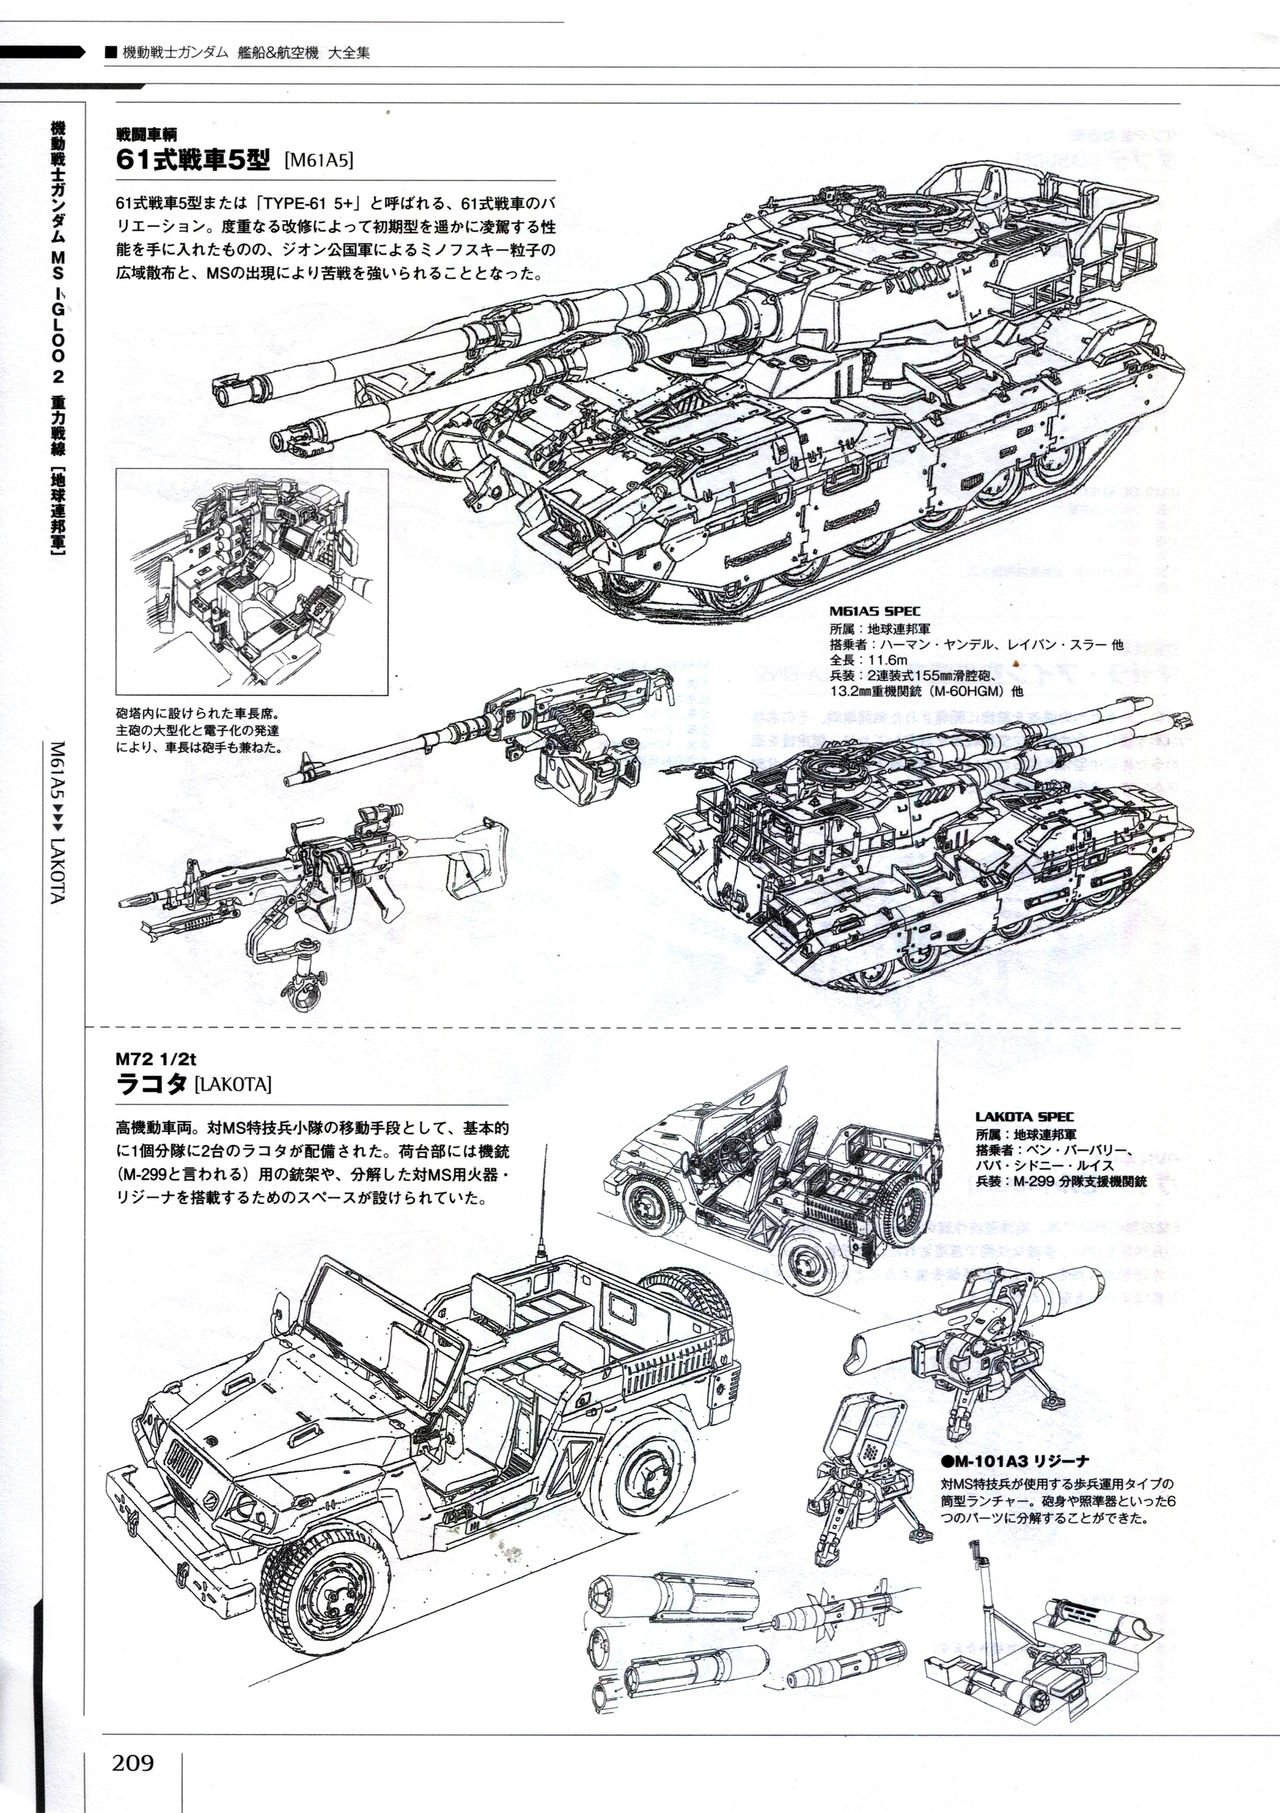 Mobile Suit Gundam - Ship & Aerospace Plane Encyclopedia - Revised Edition 214